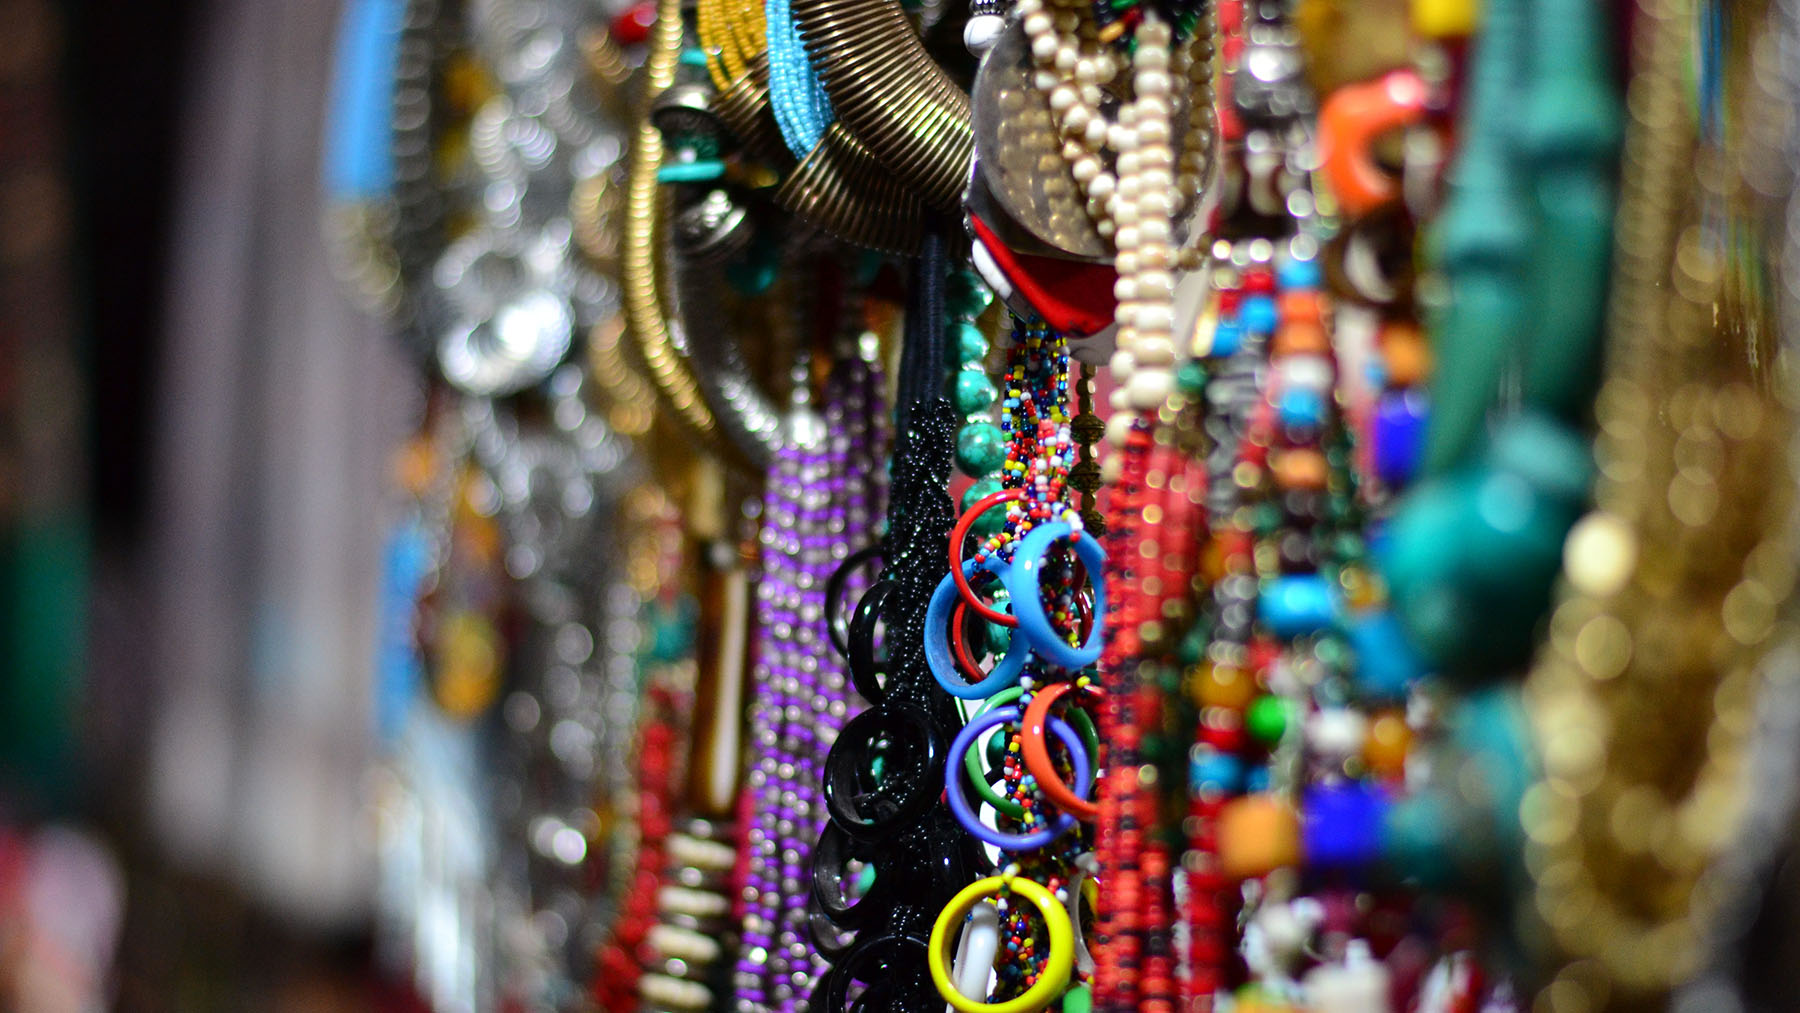 Stock photo of handmade jewelry (Image by RawPixel.com)